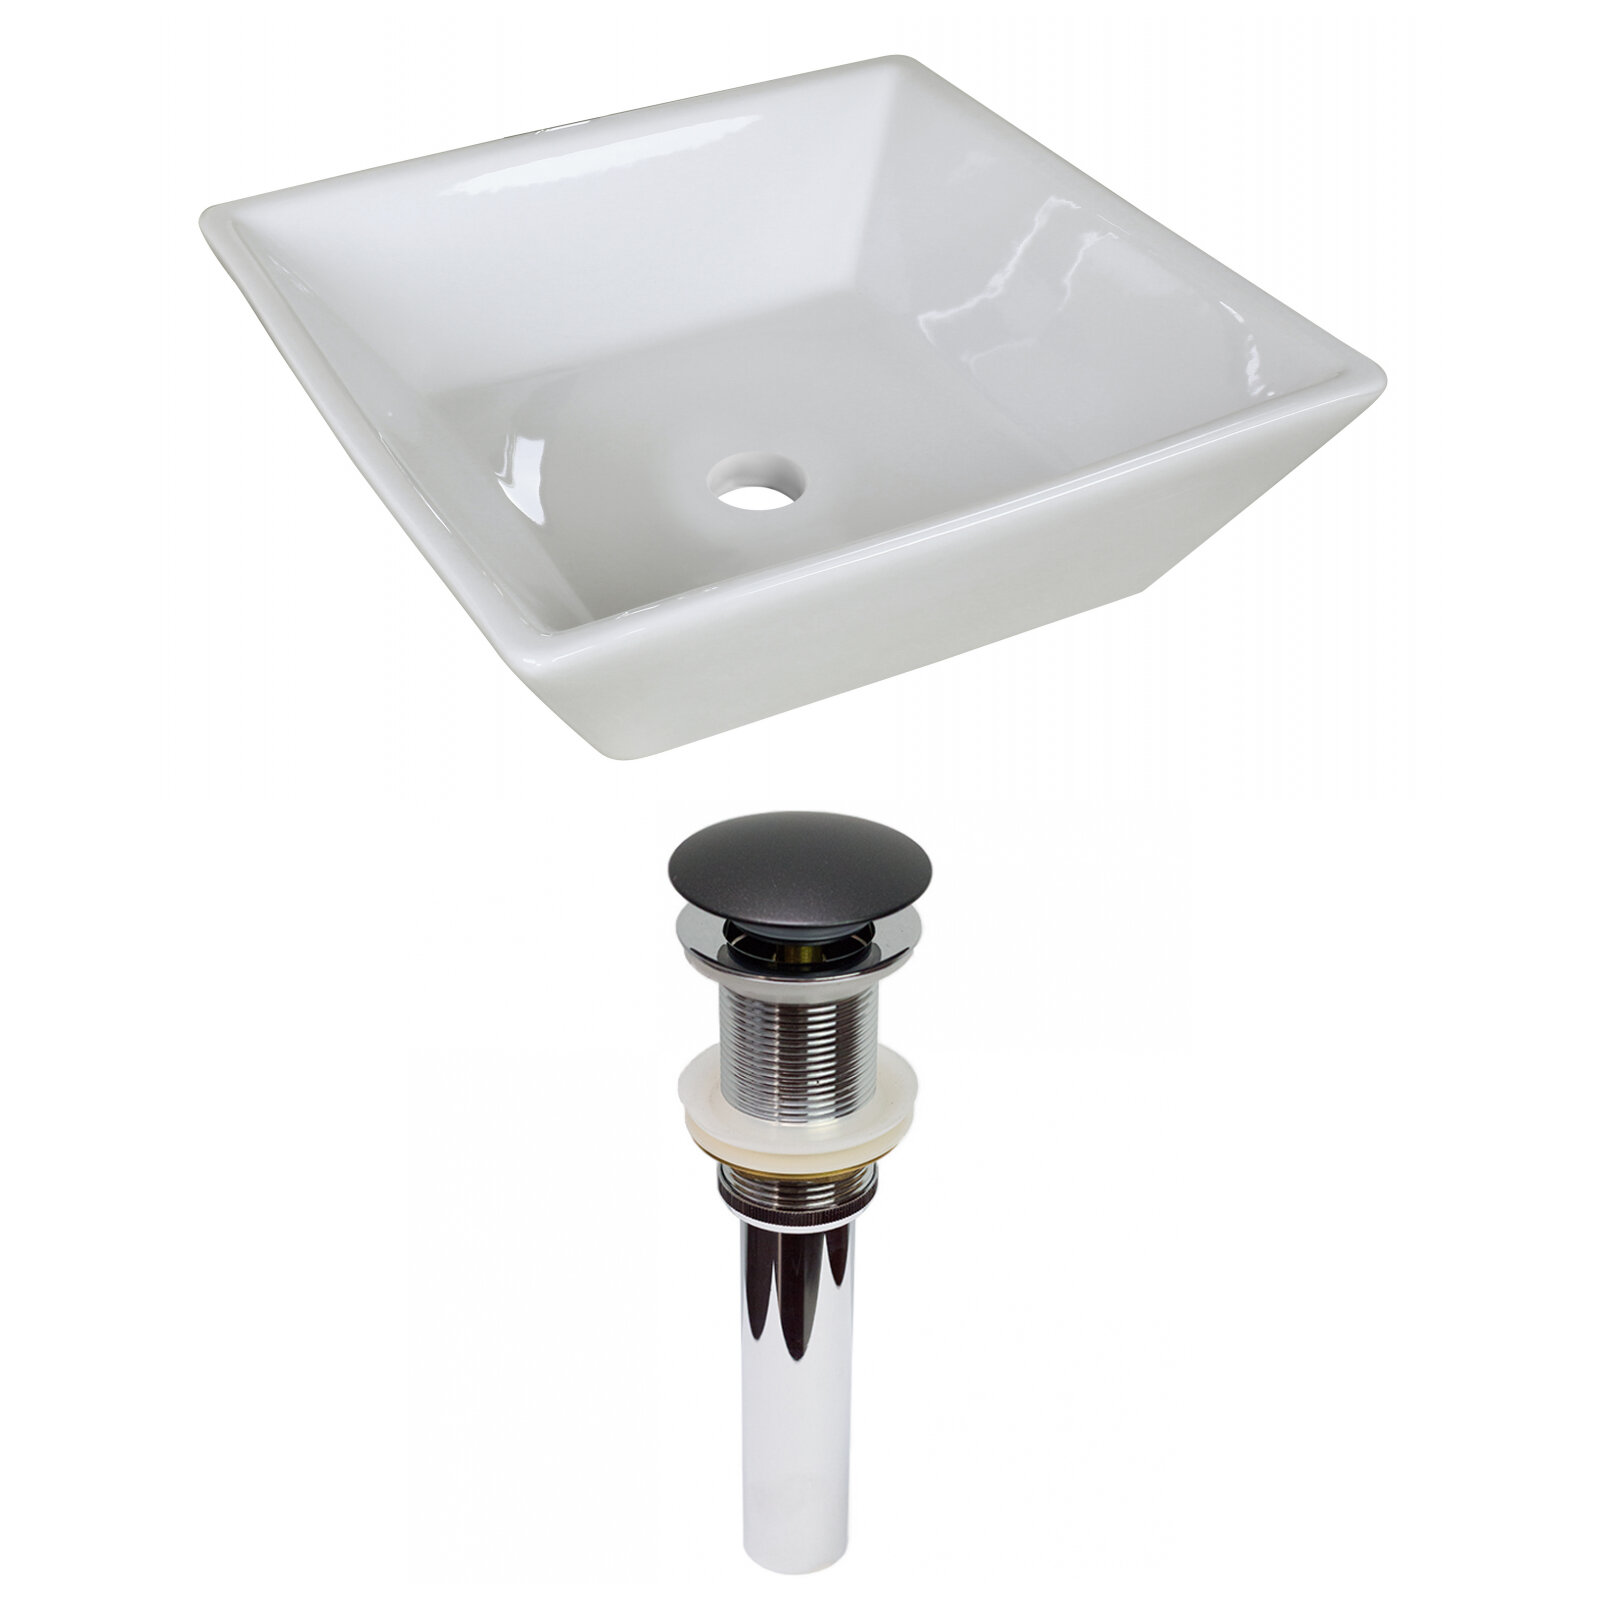 Royalpurplebathkitchen White Enamel Glaze Ceramic Square Vessel Bathroom Sink Wayfair